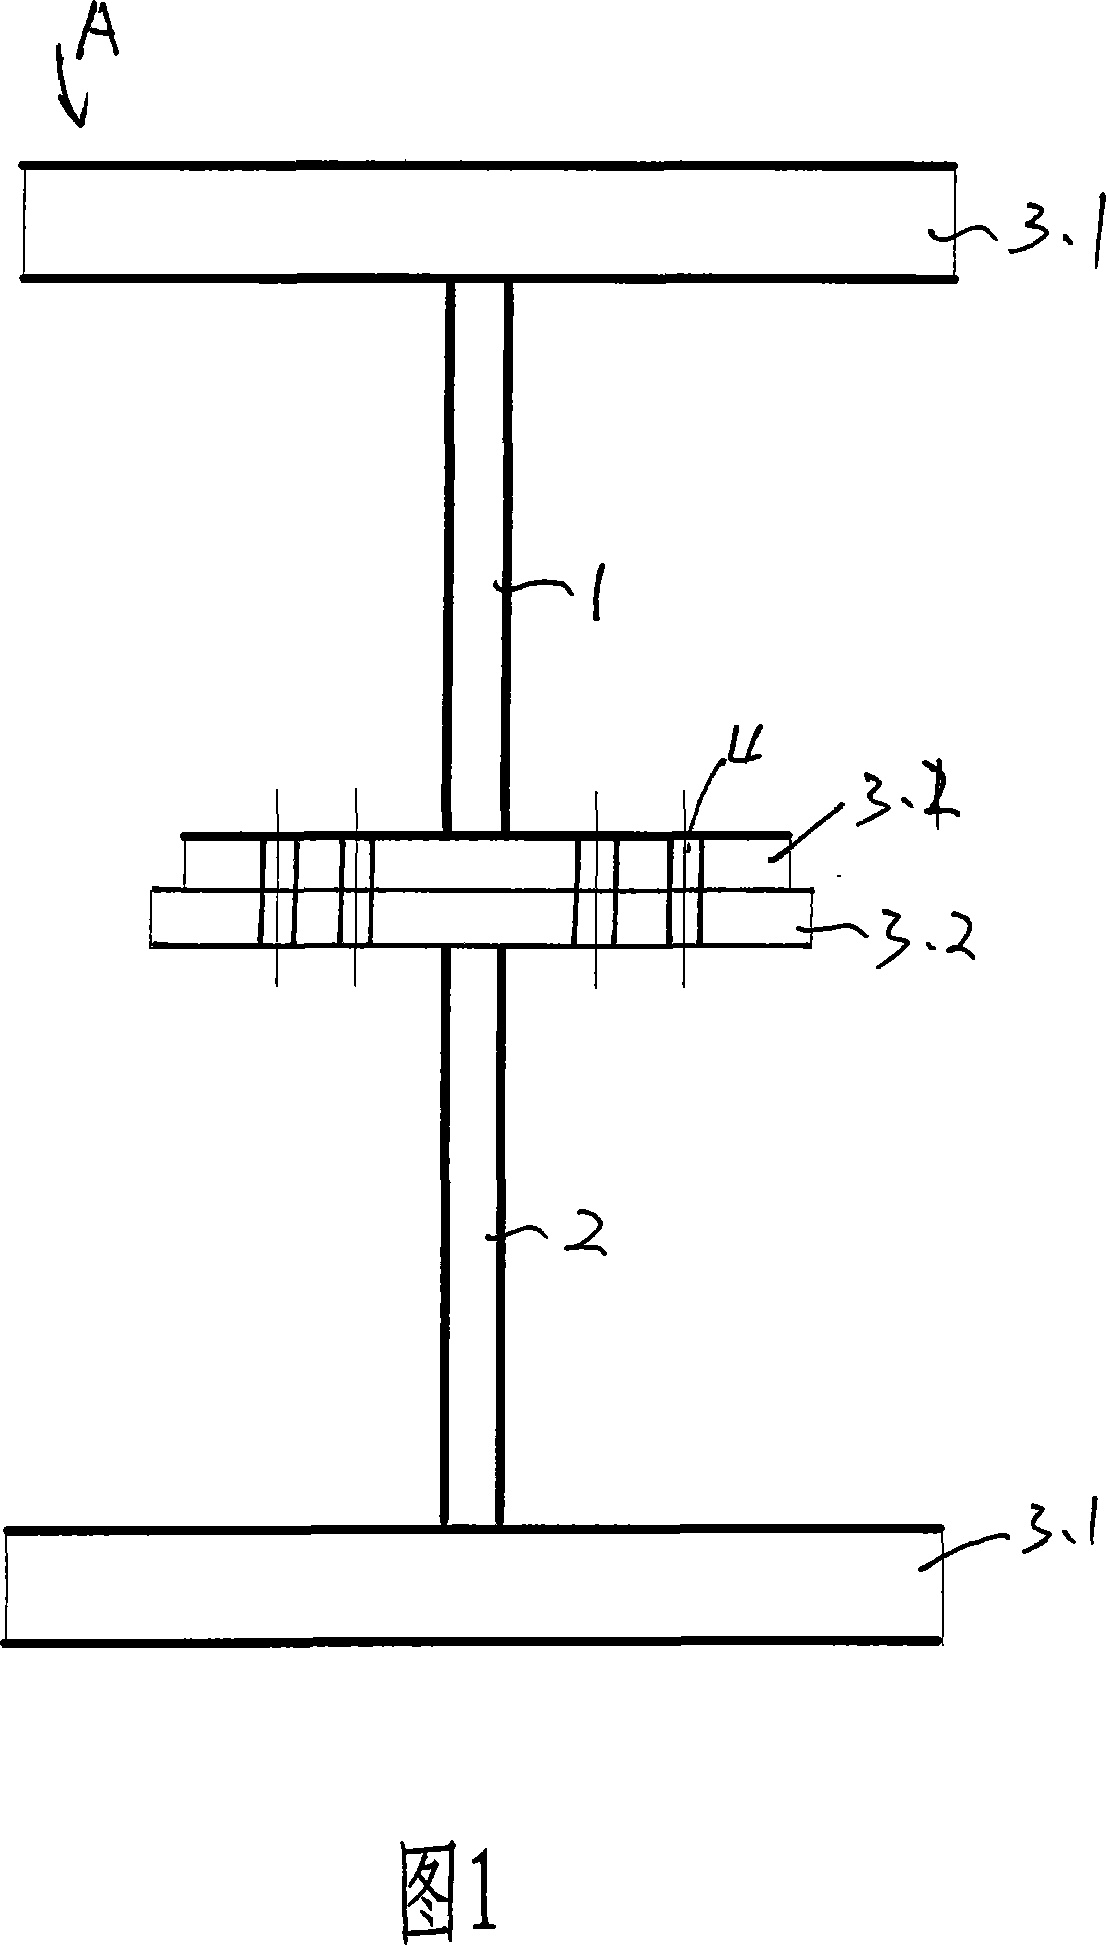 Method for preparing plate assembly composite spliced beam